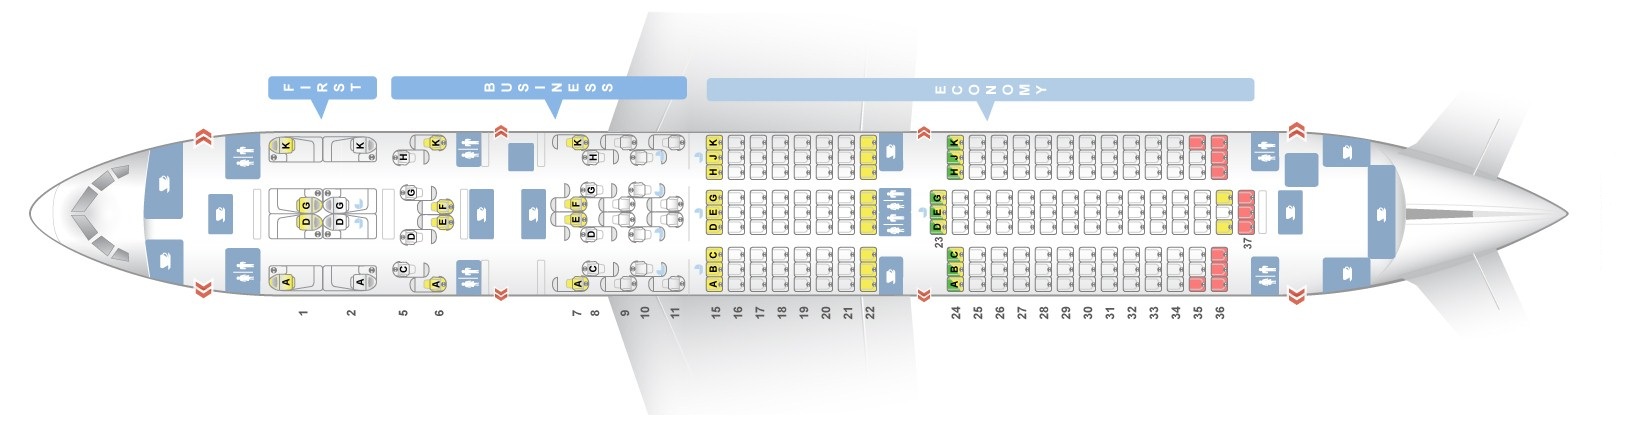 Seat Map Boeing 787 9 Dreamliner Etihad Airways Best Seats